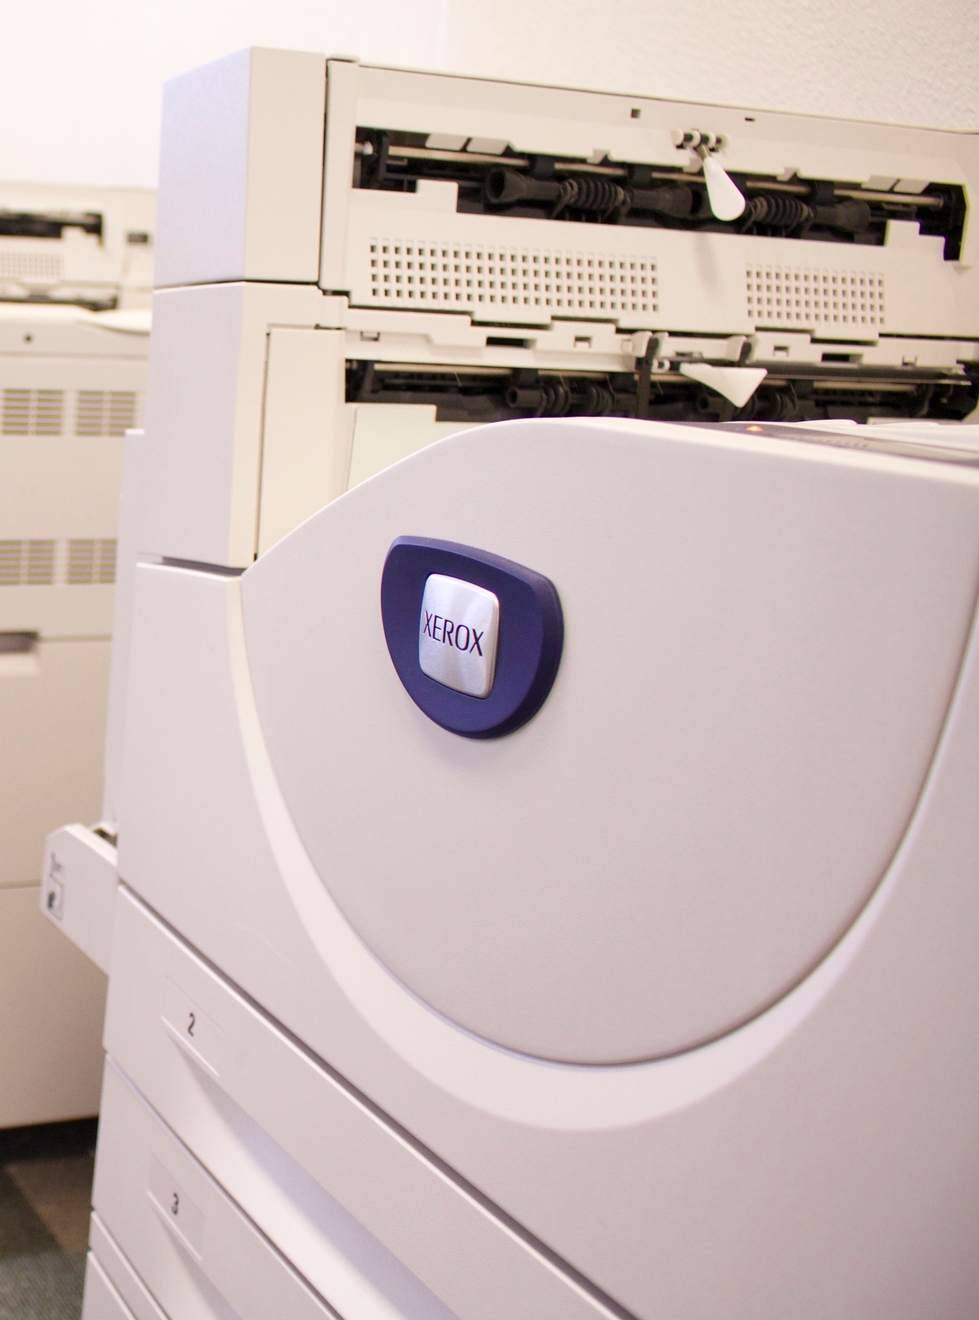 GVSU Xerox printer